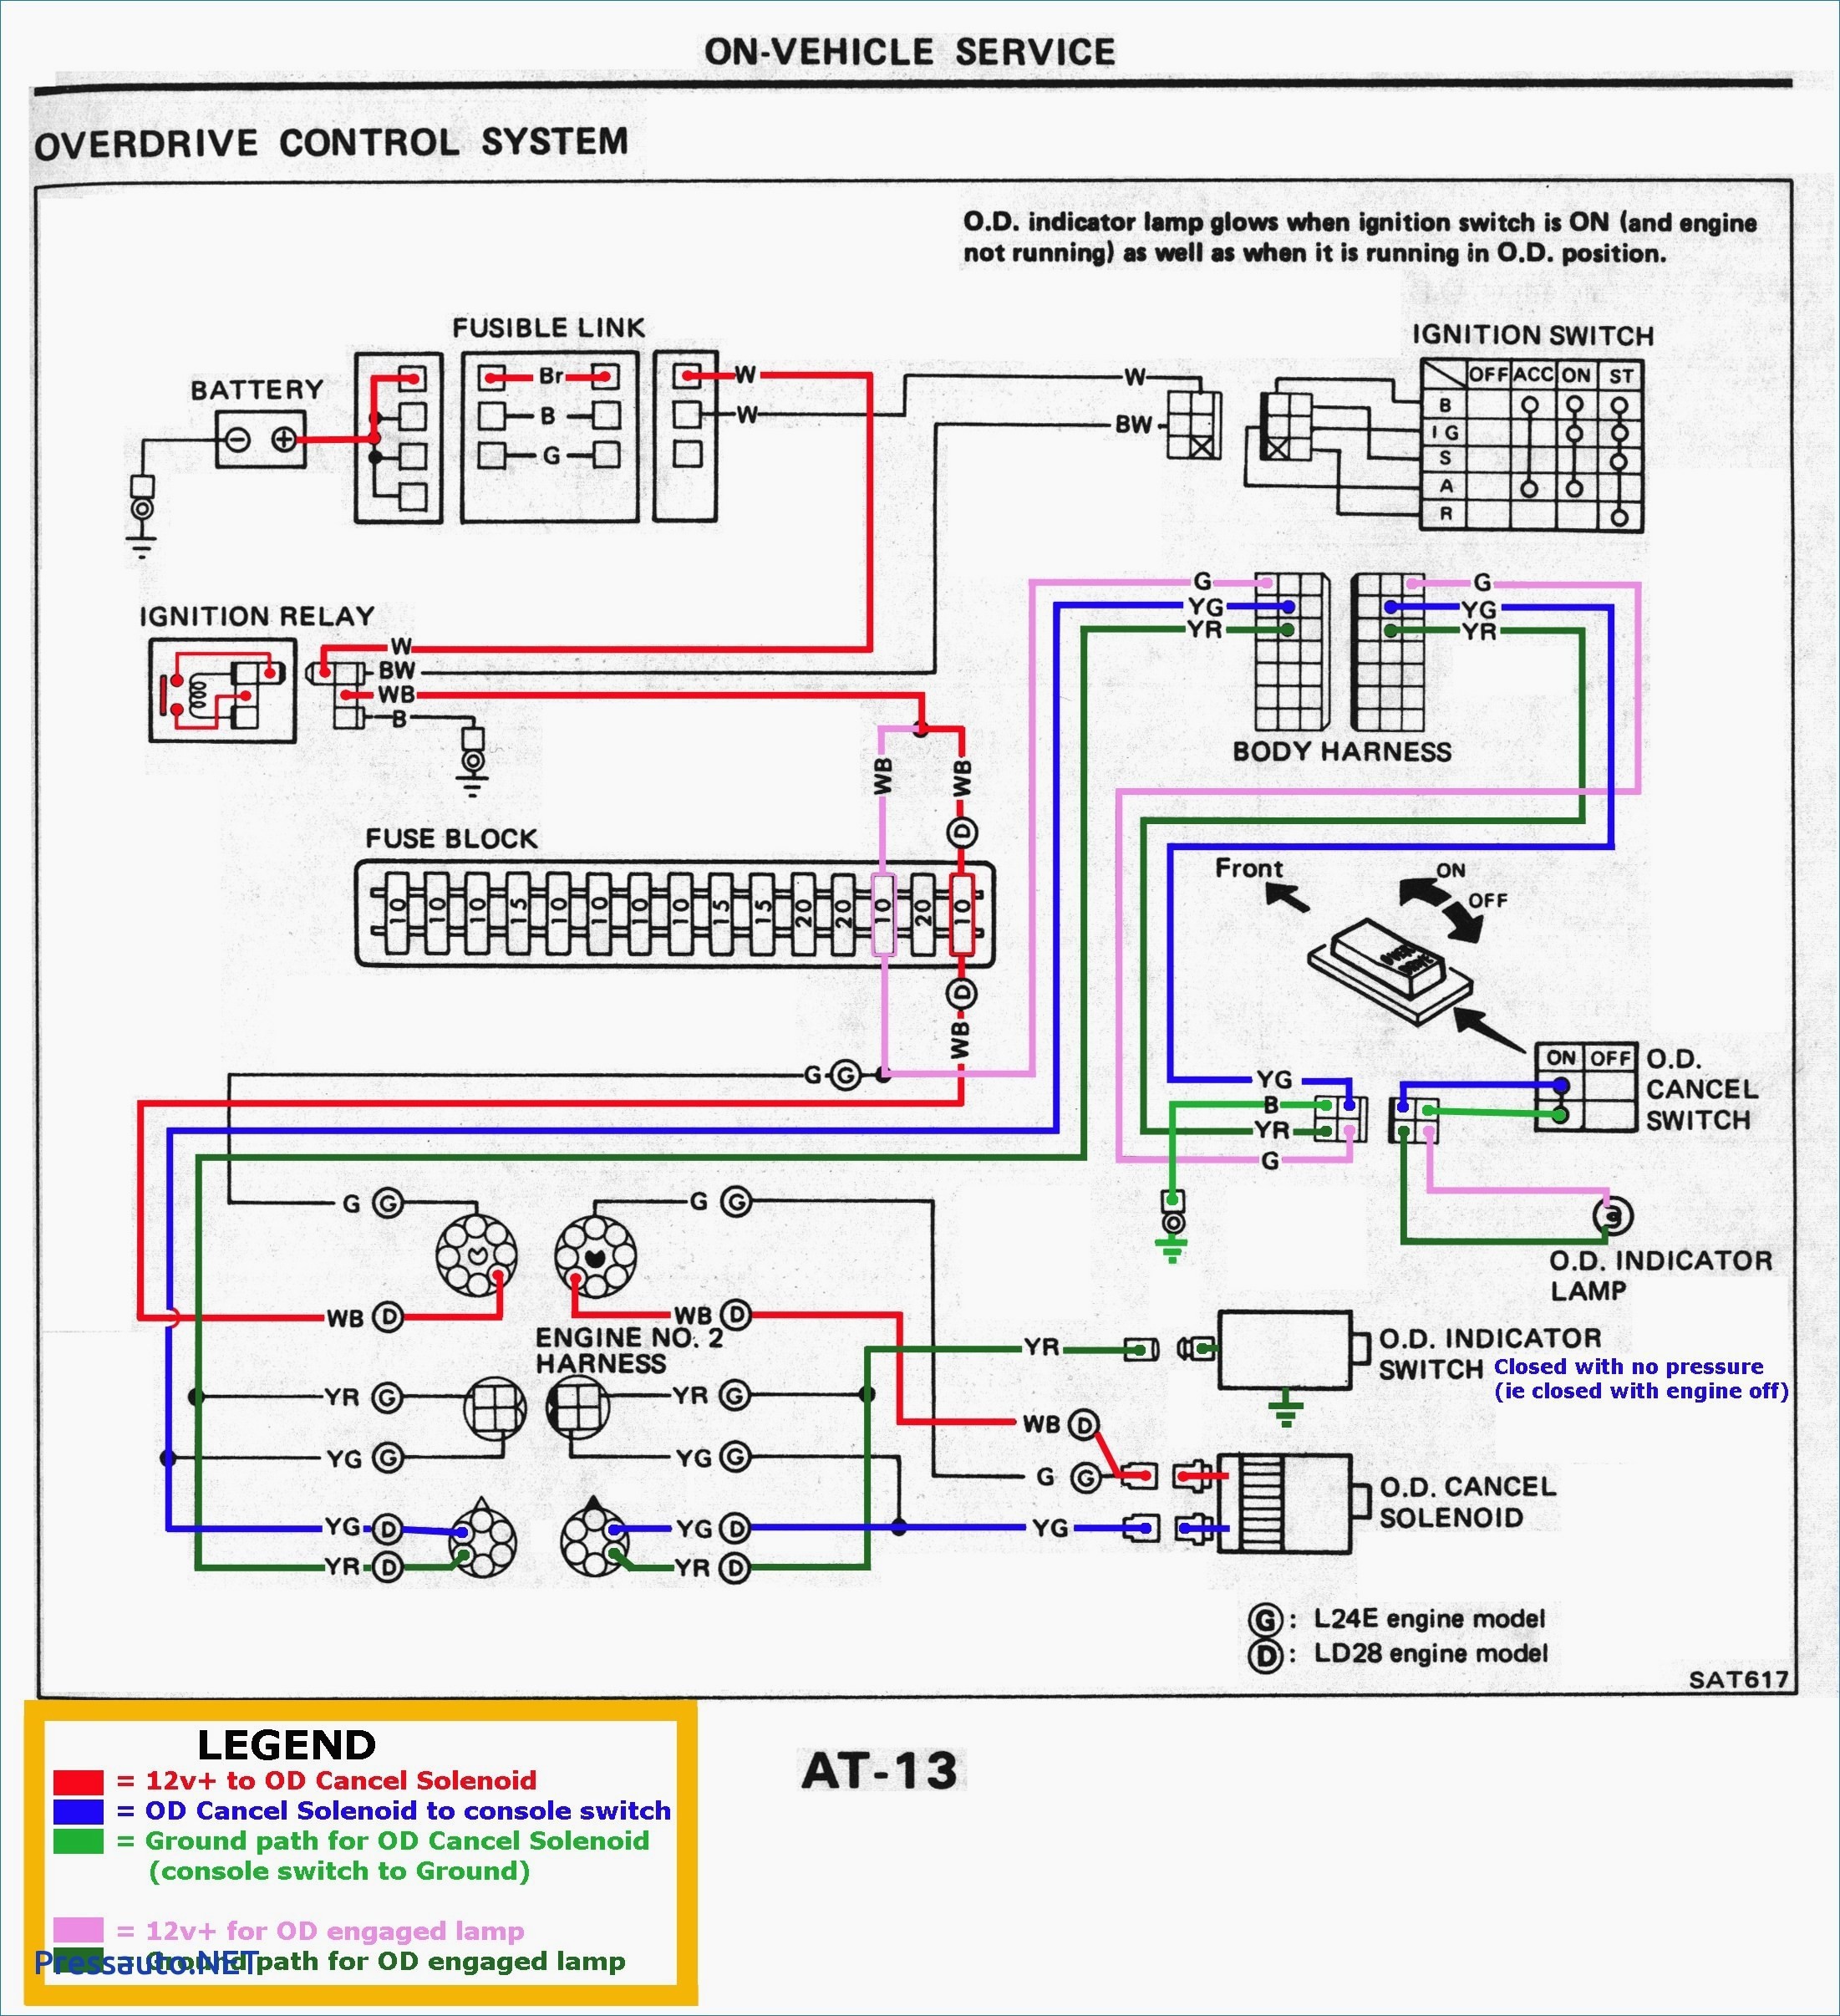 Car Audio Diagrams and Charts Free Vehicle Wiring Diagrams Sample Of Car Audio Diagrams and Charts